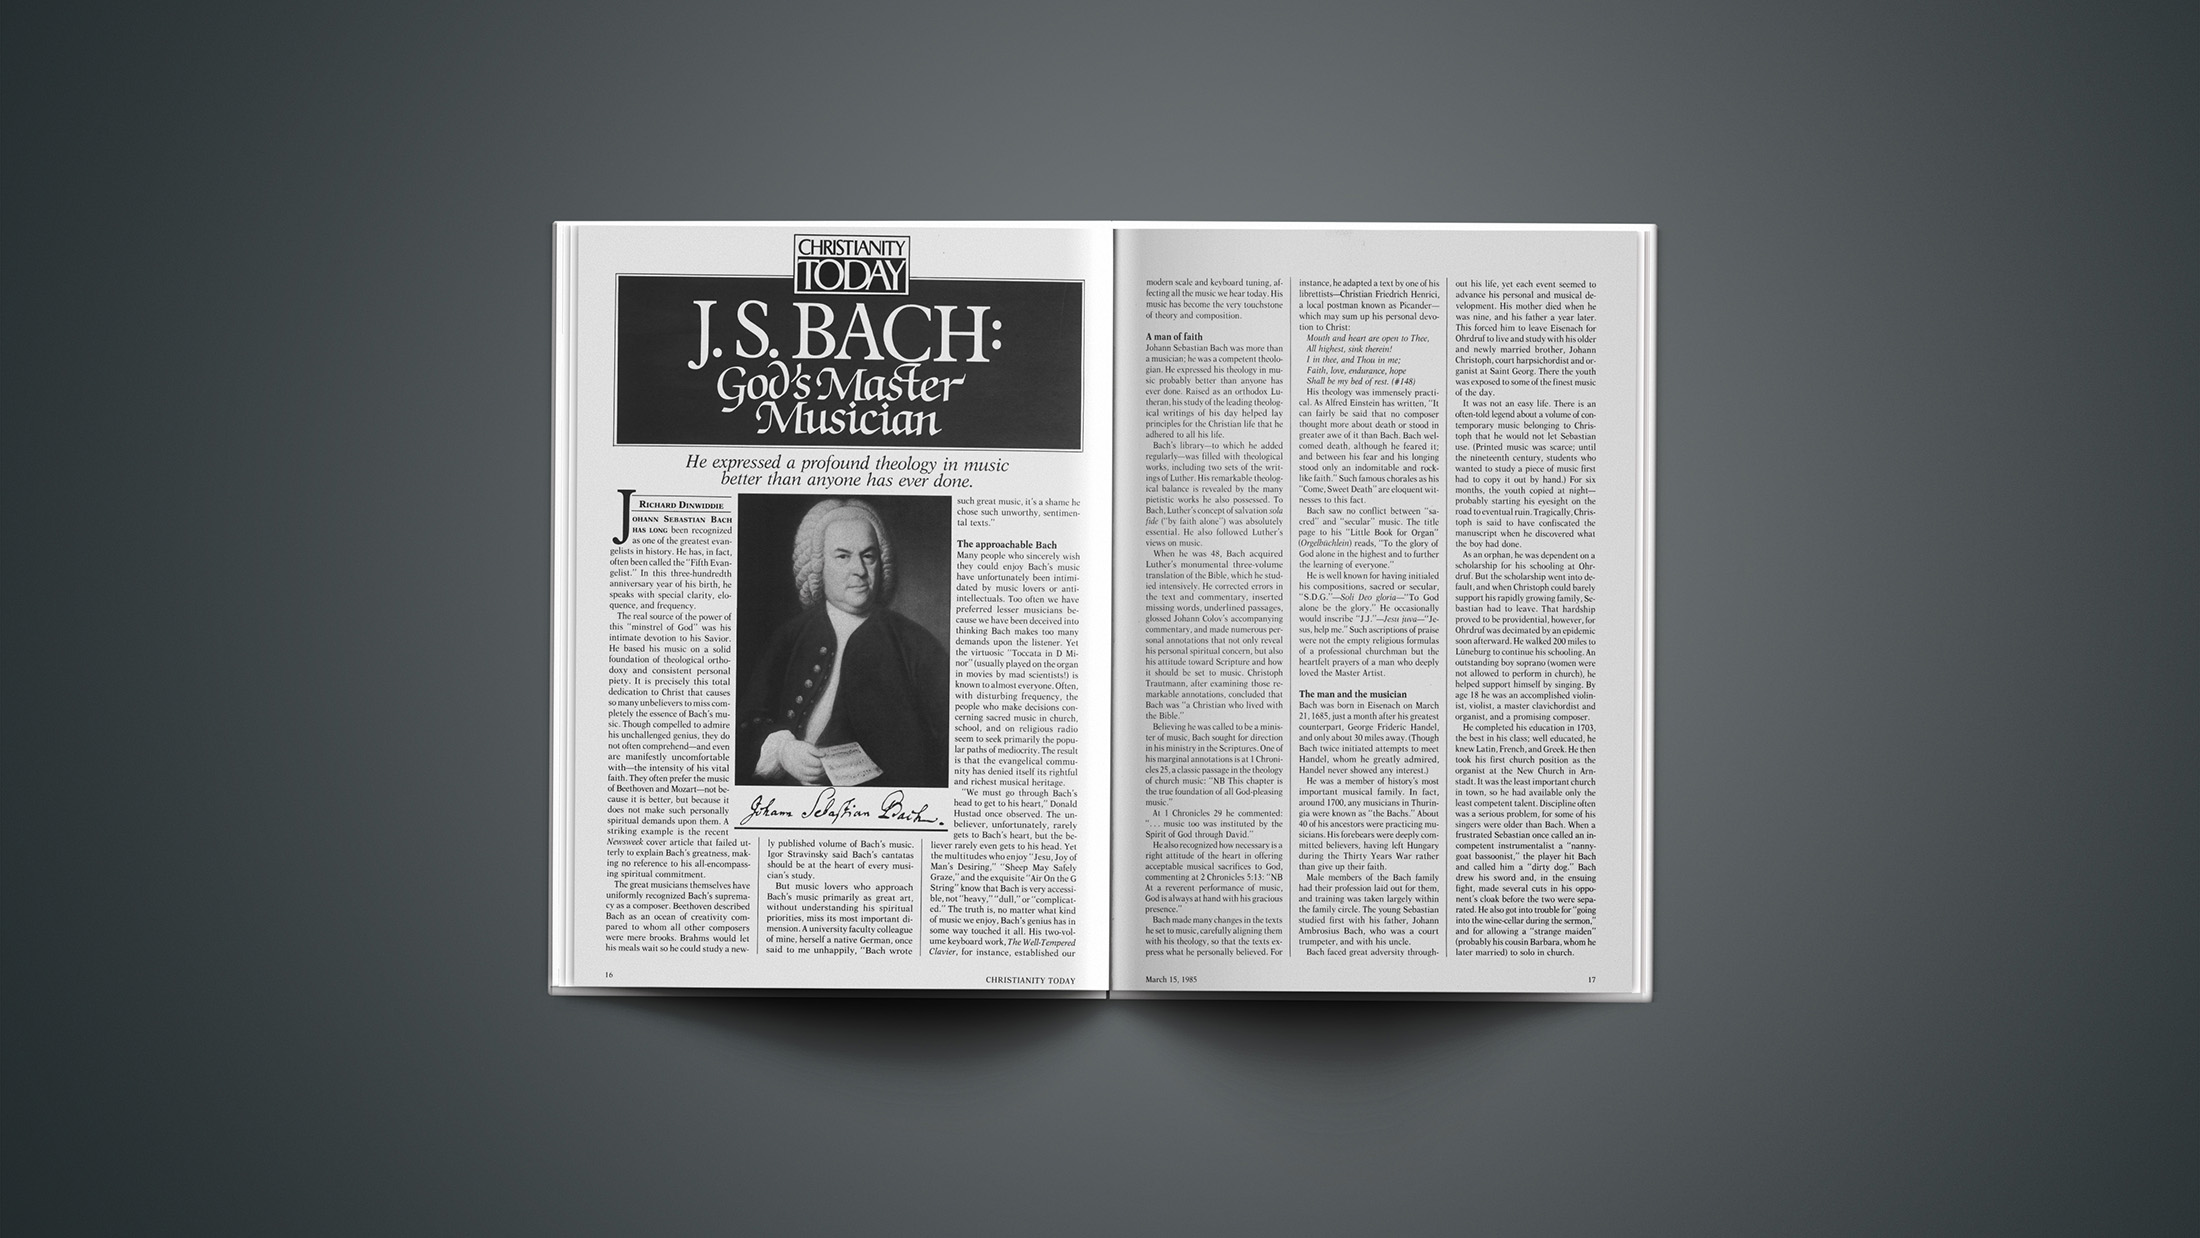 Johann Sebastian Bach as a Protestant composer and 'The Fifth